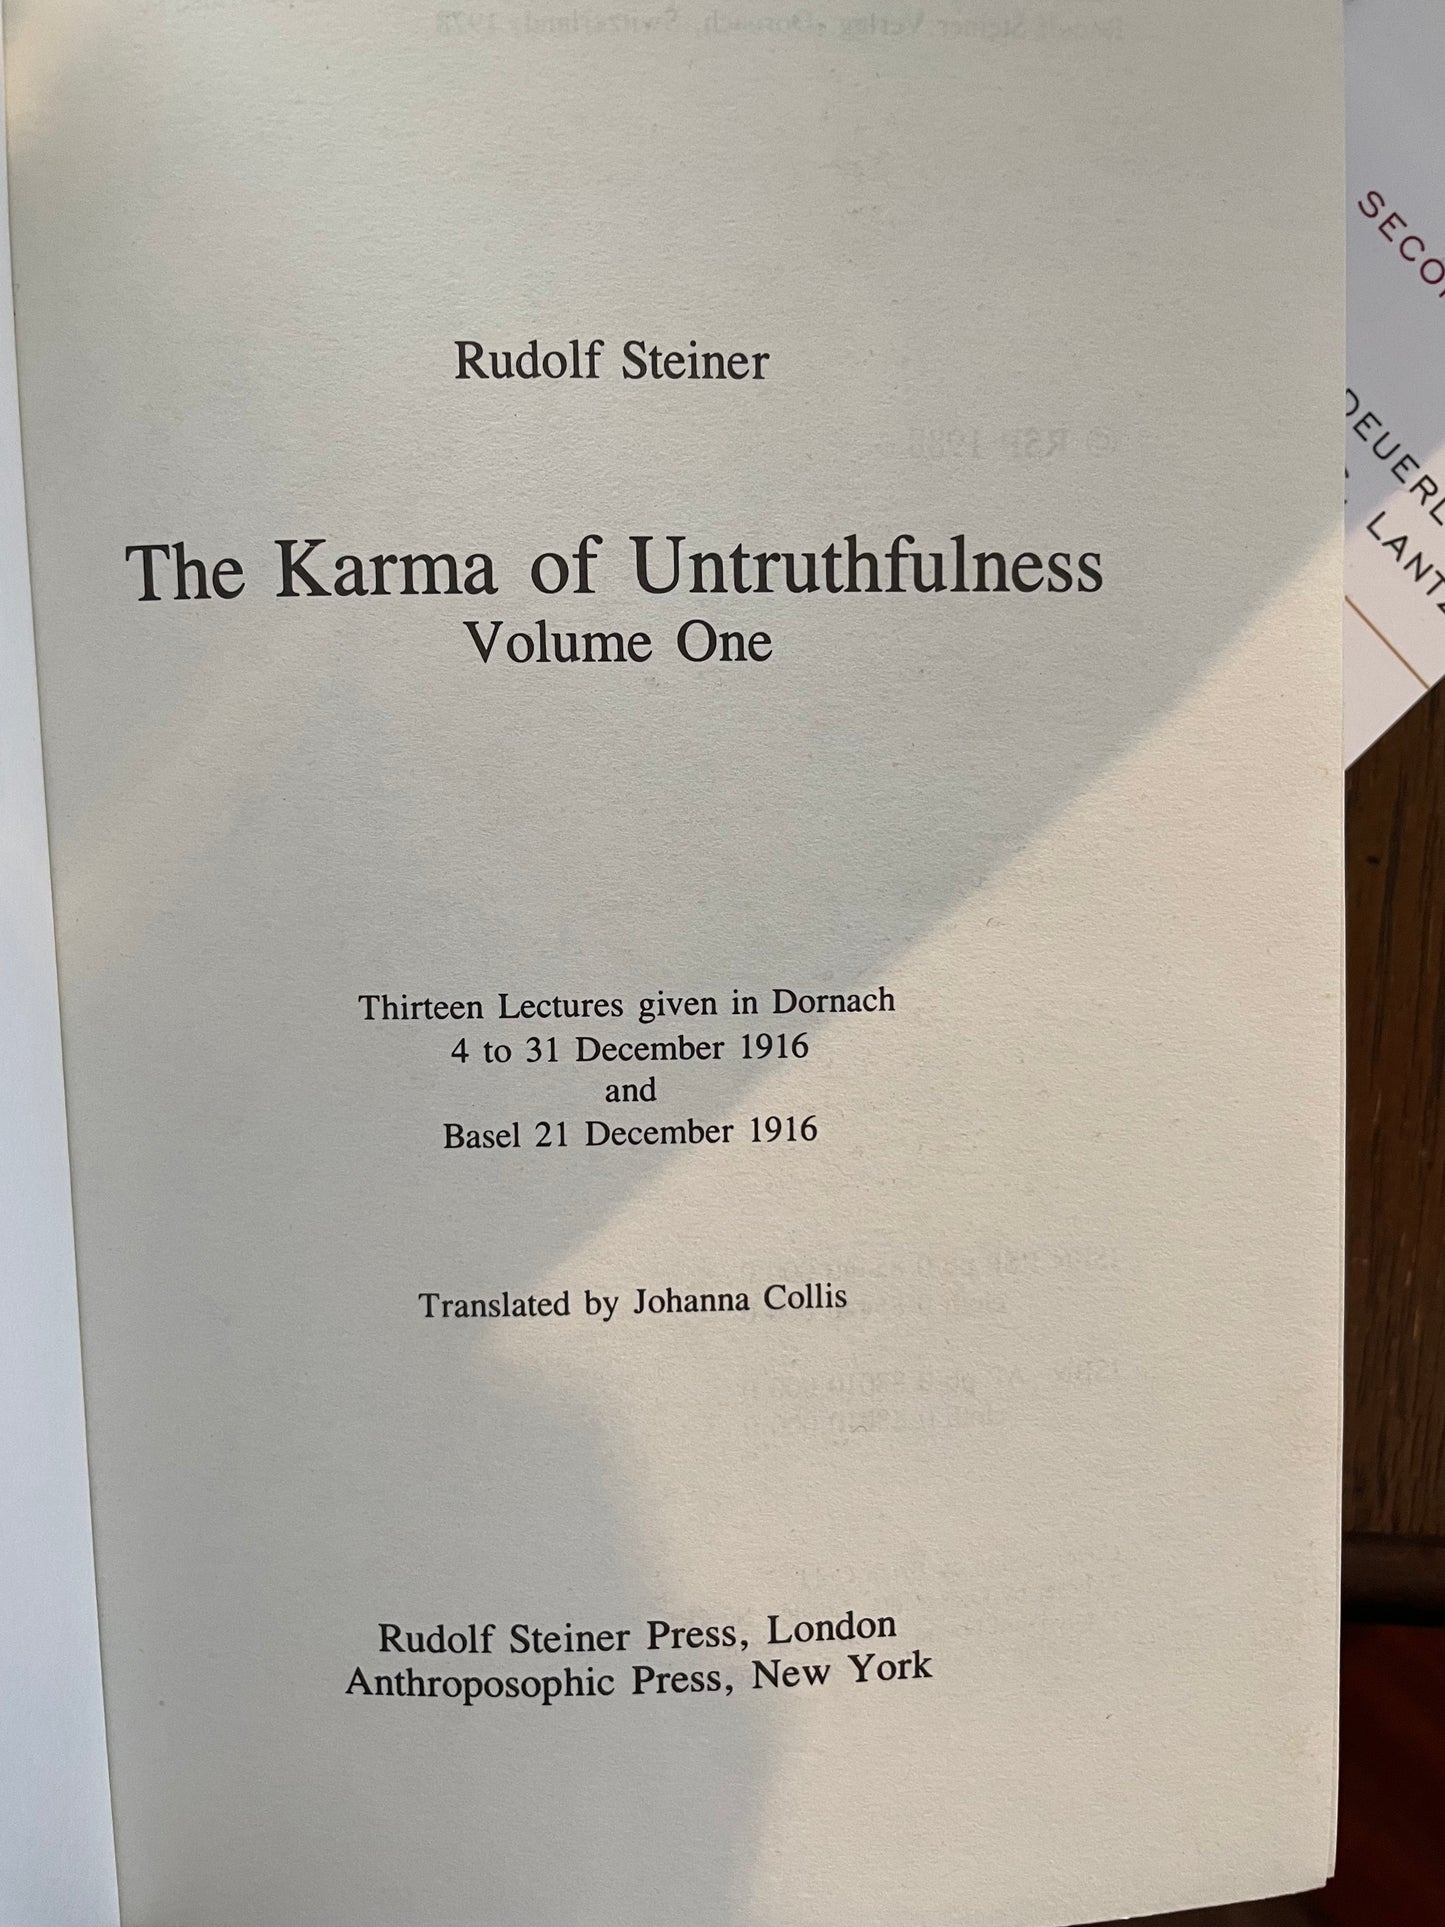 The Karma of Untruthfulness Vol. I by Rudolf Steiner